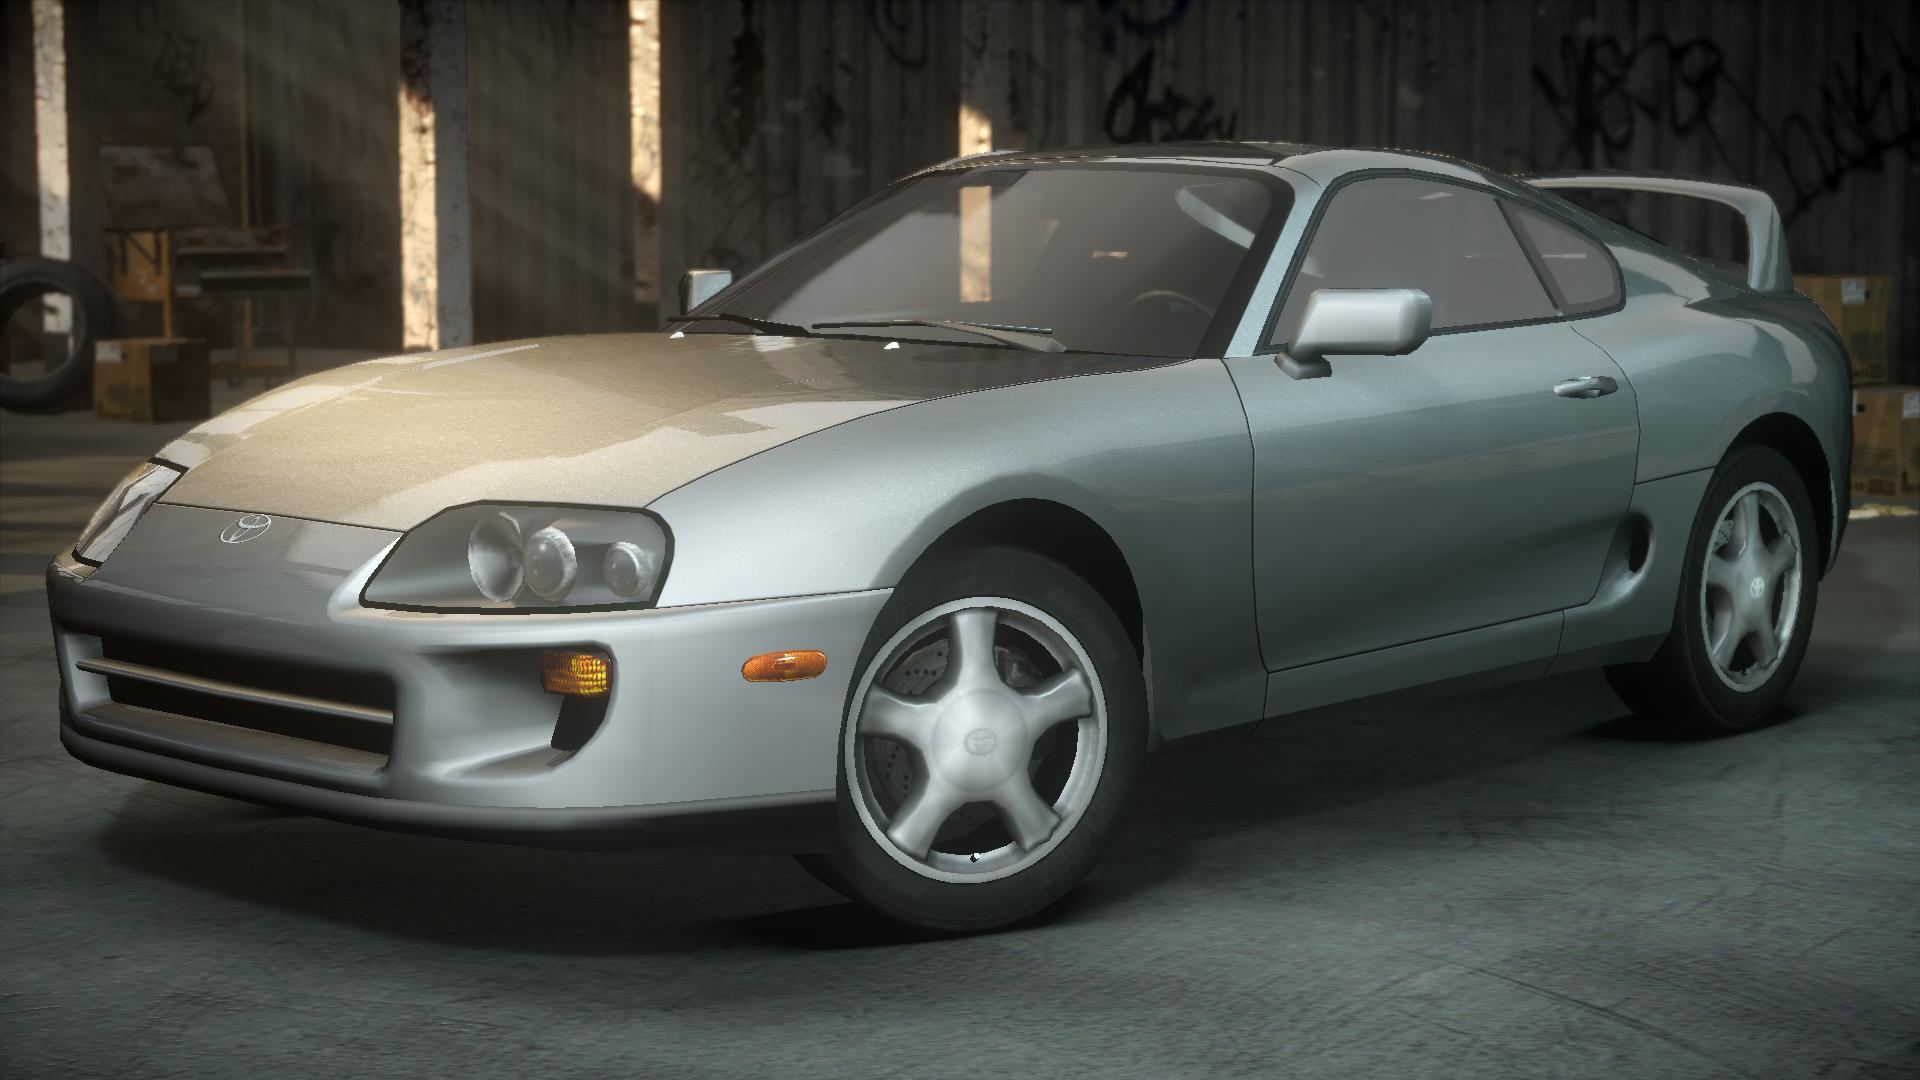 Toyota Supra RZ (Mk4), Need for Speed Wiki